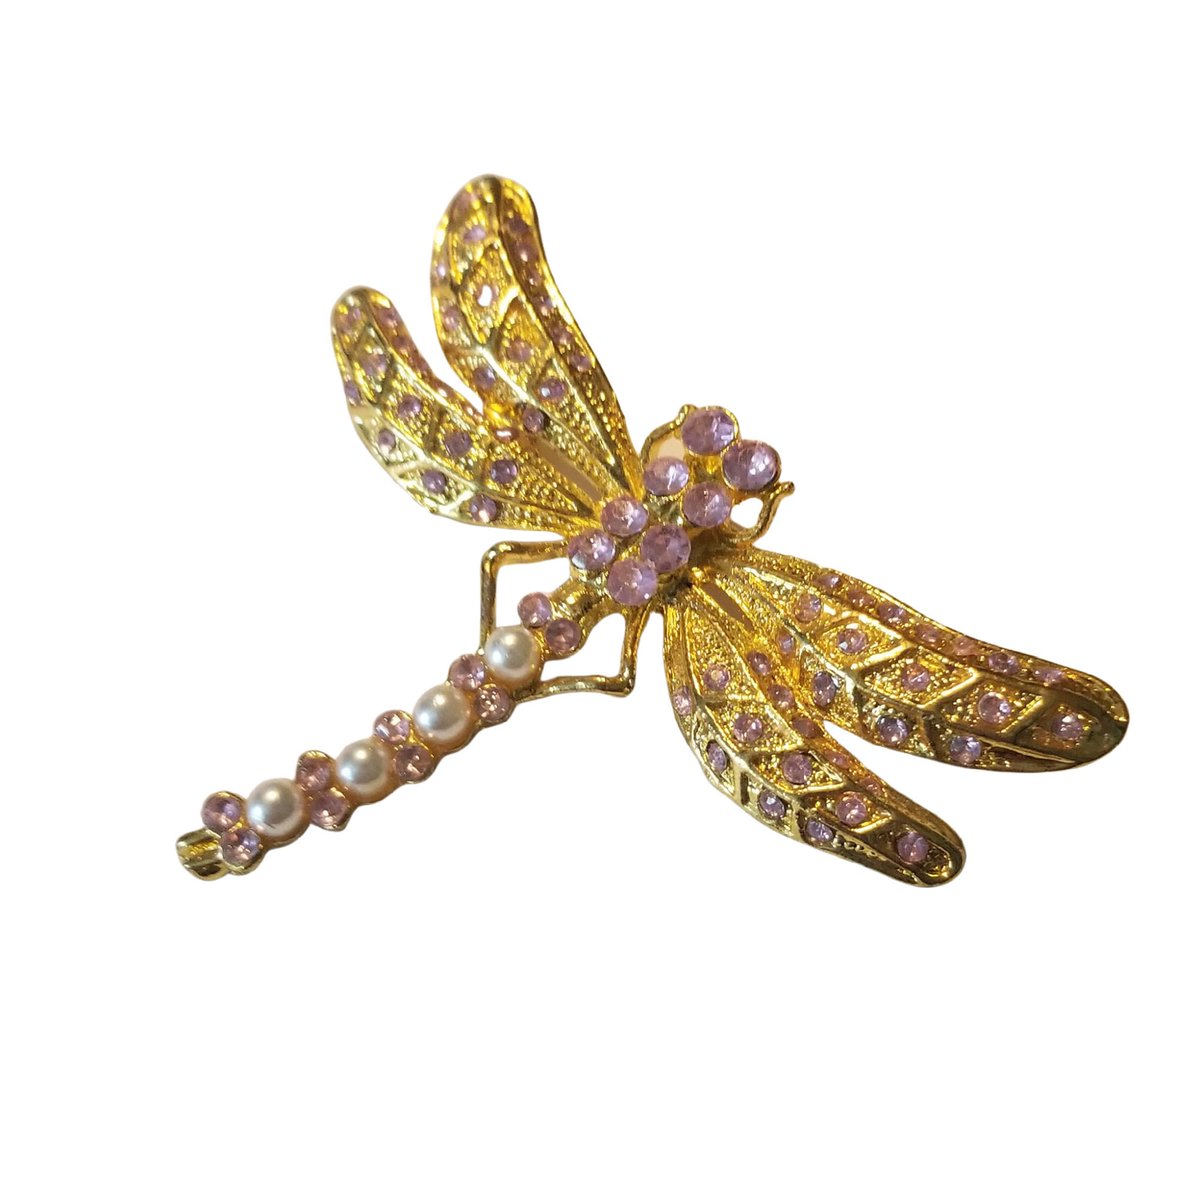 Vintage Pink Crystal Aurora Borealis Dragonfly Brooch 2.75' etsy.me/3JkvJIL #pink #animals #gold #midcentury #gotvintage #junkyardblonde #uniquejewelry #vintagejewelry #vintagebrooch